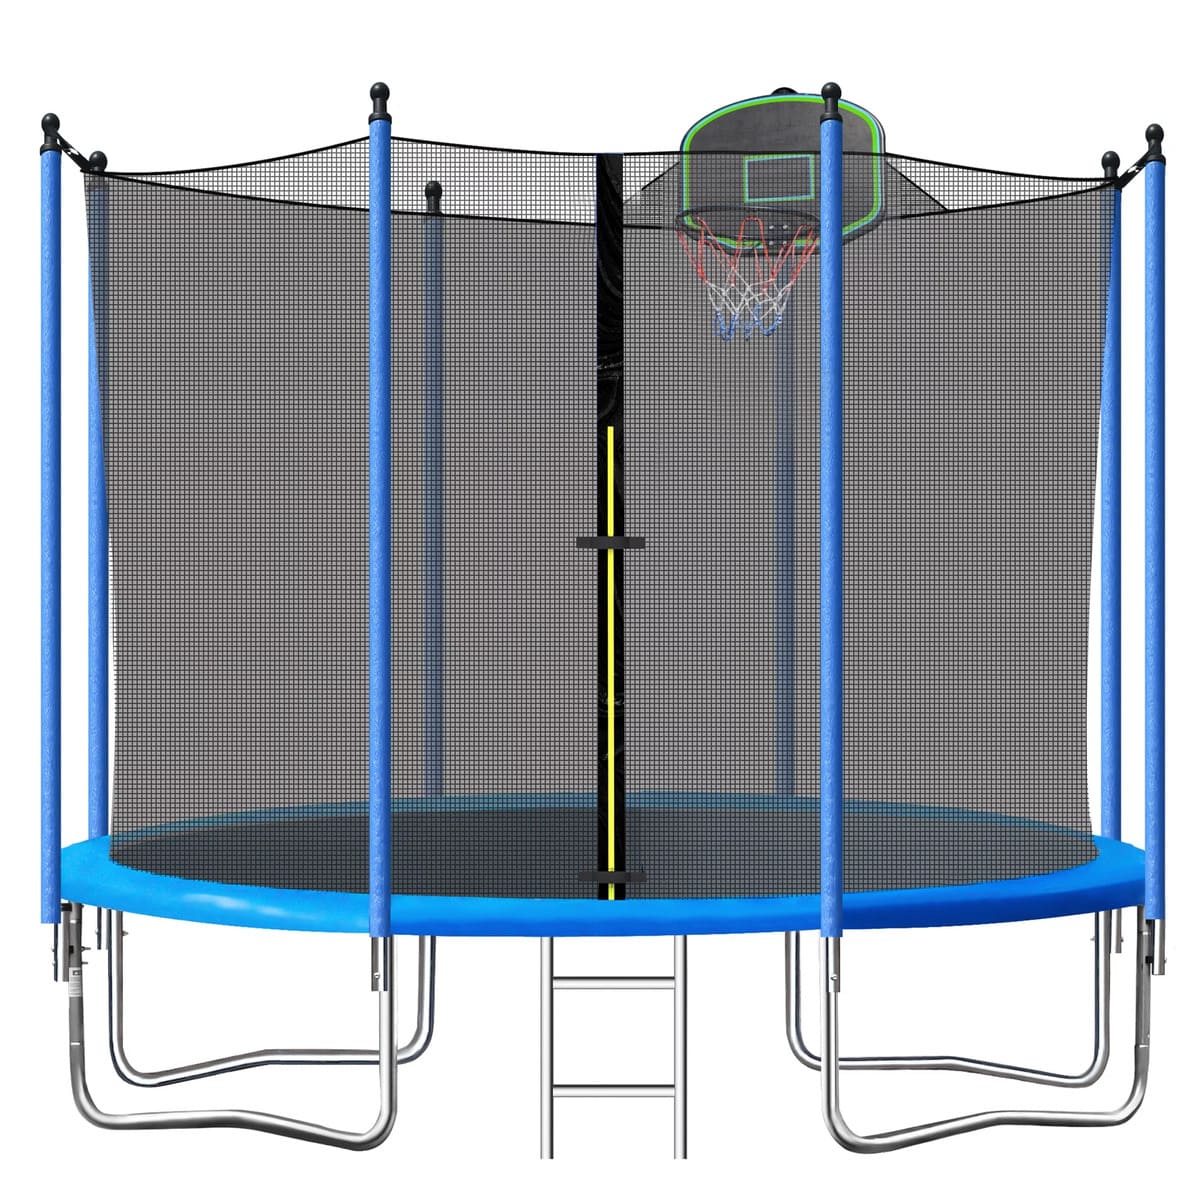 Walmart SEGMART 10ft Trampoline for Kids with Basketball Hoop and Enclosure Net